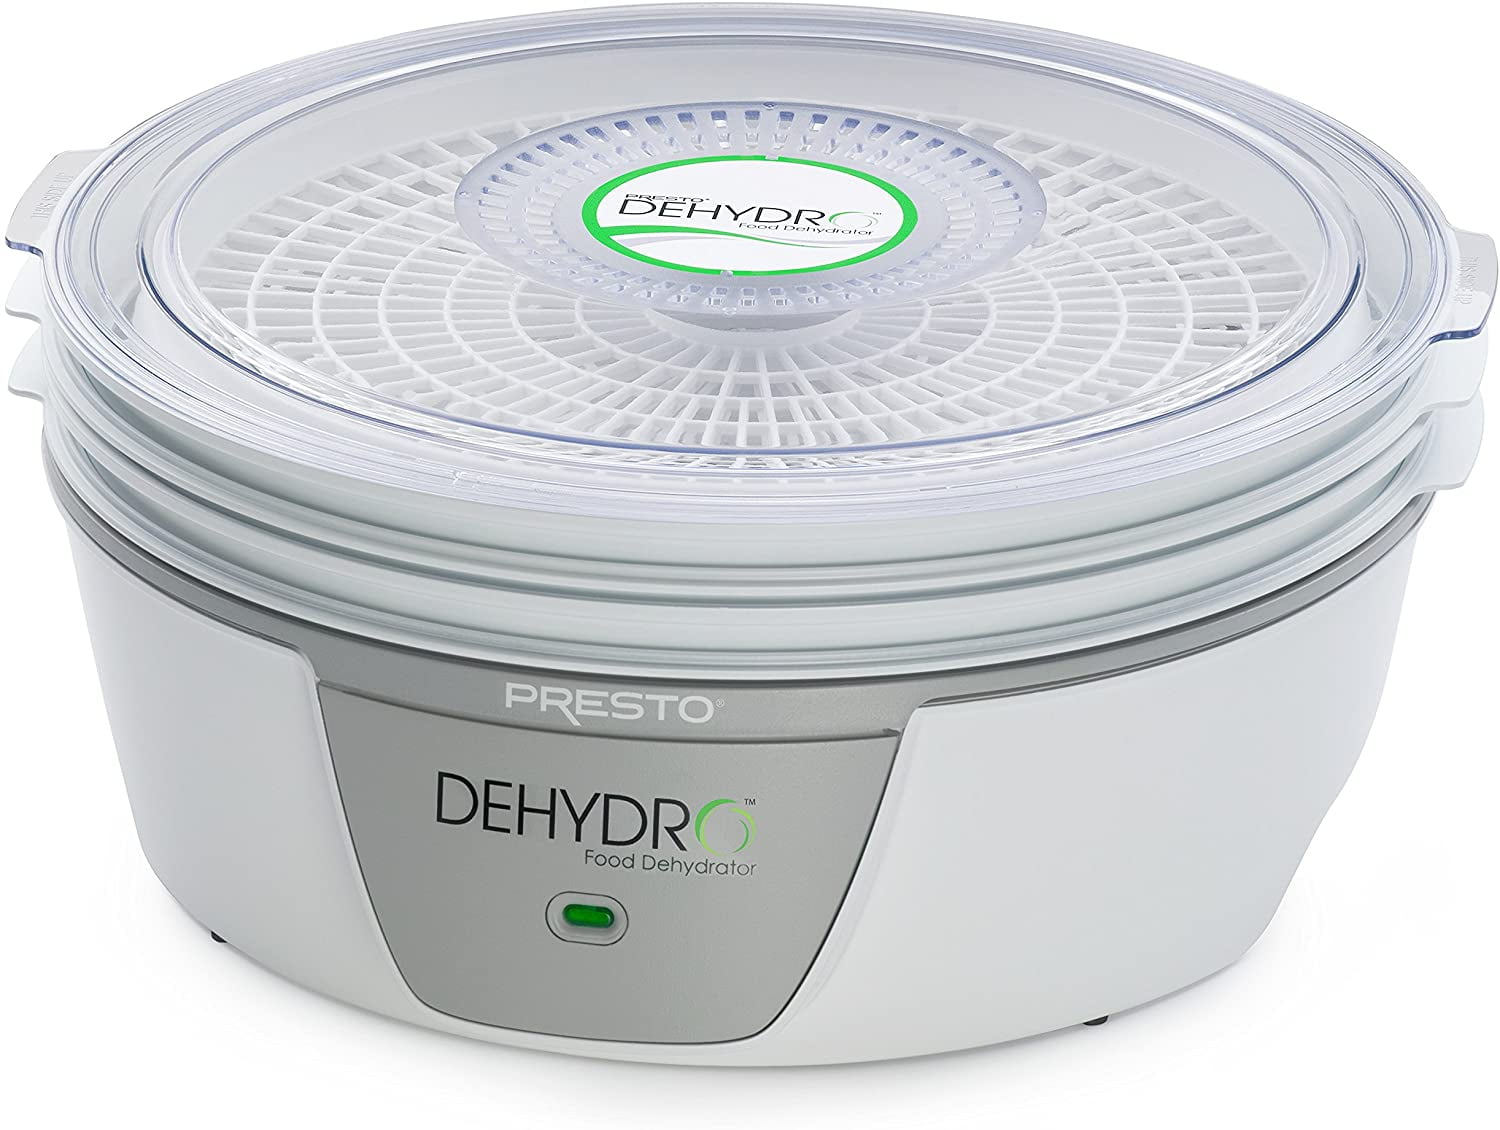  Presto 06300 Dehydro Electric Food Dehydrator, Standard: Home &  Kitchen